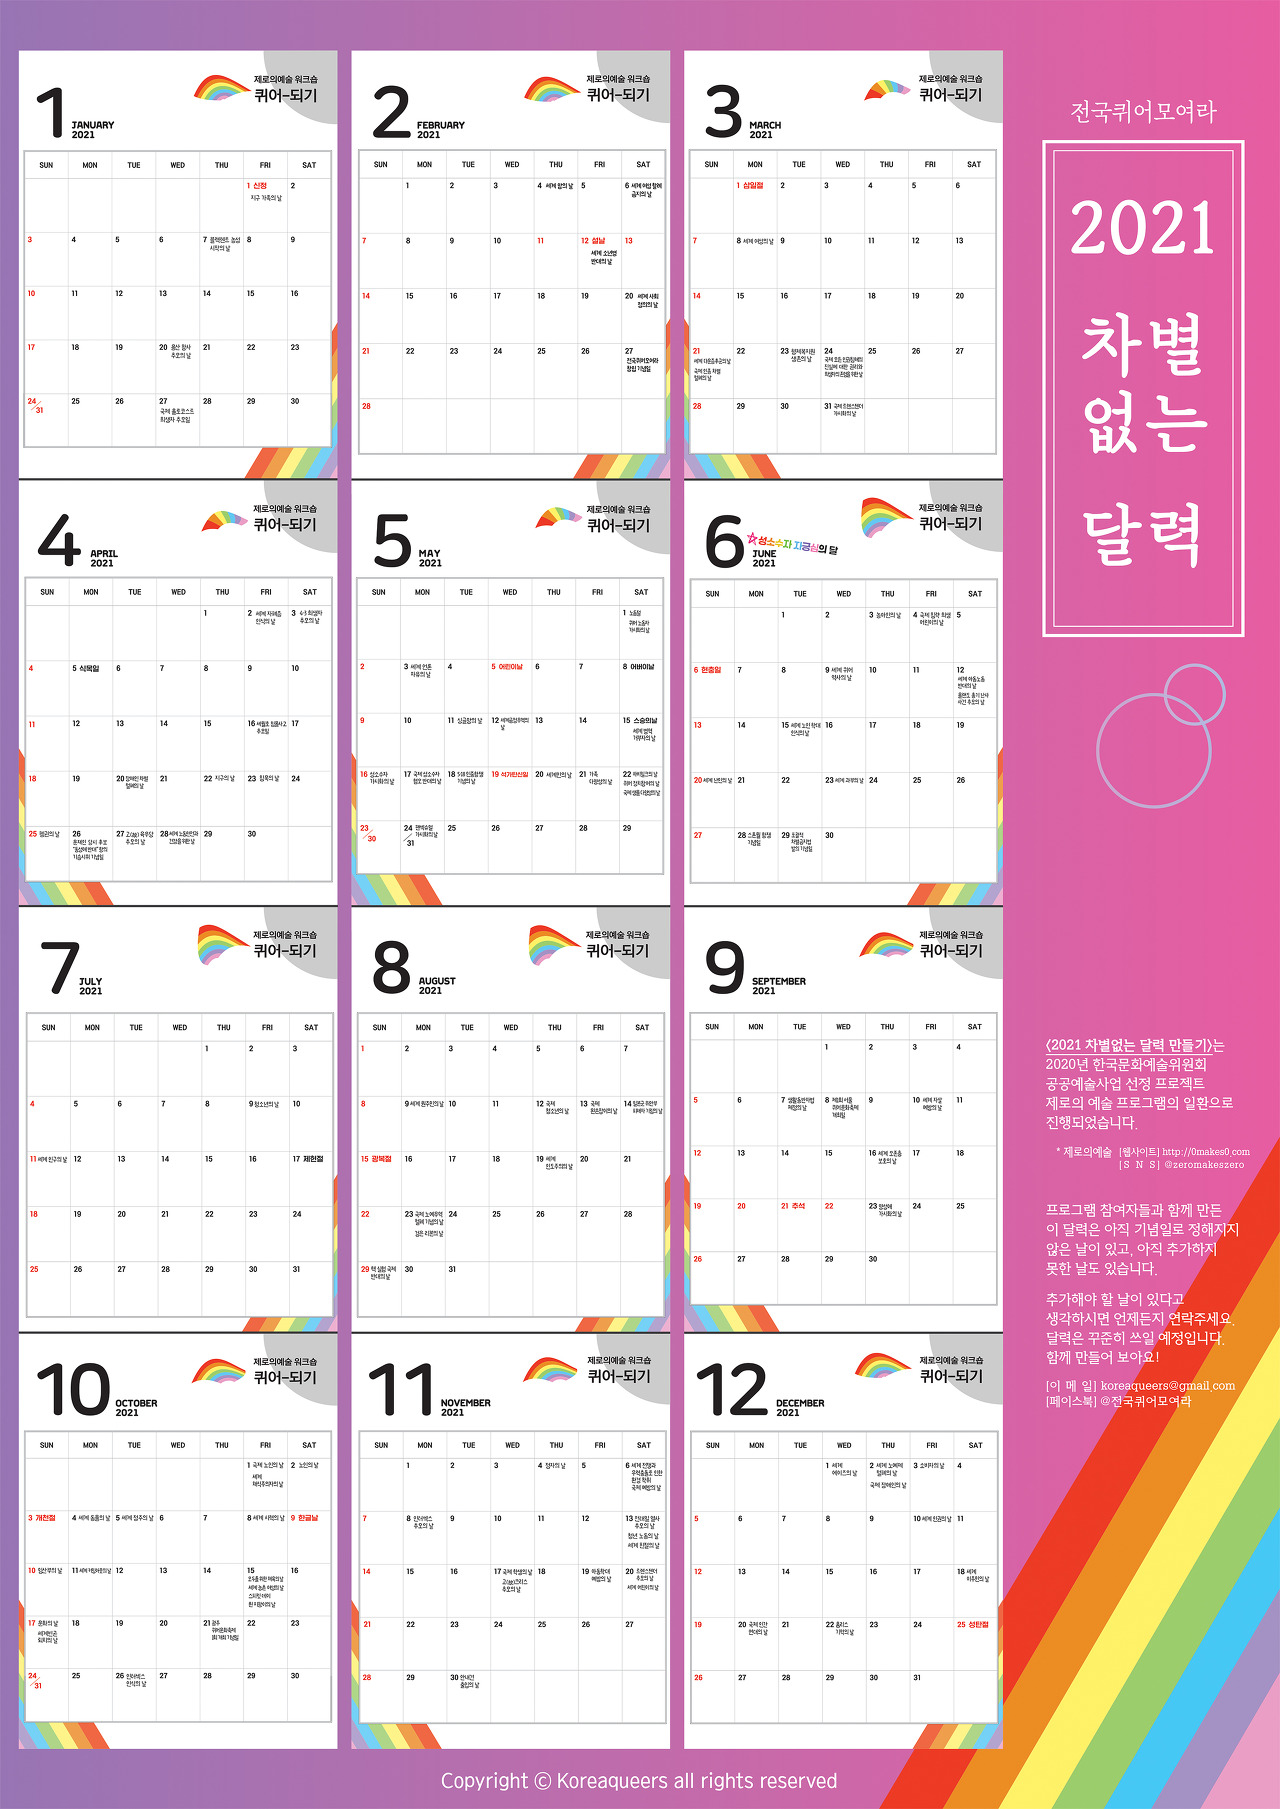 Be queer 2021 calendar poster